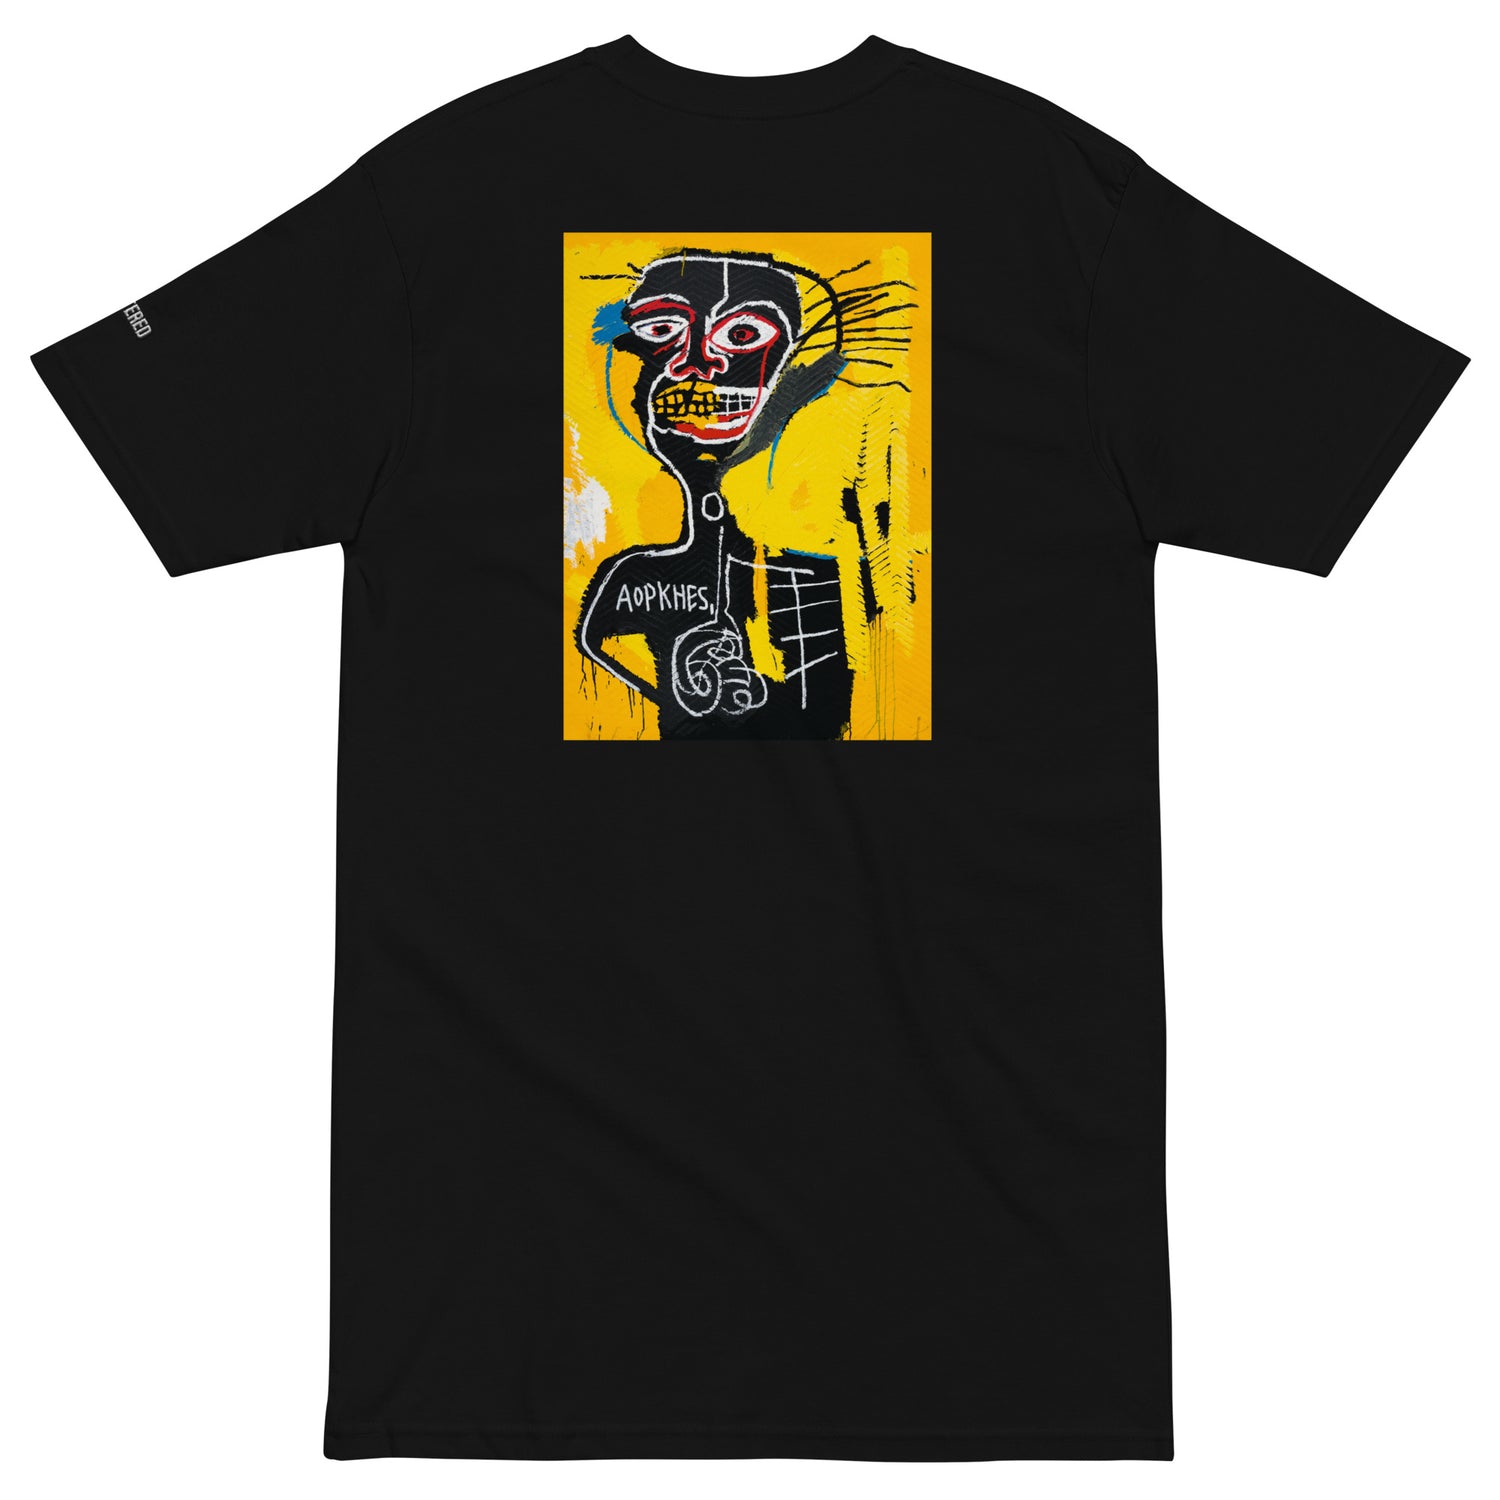 Jean-Michel Basquiat "Cabeza" Artwork Embroidered + Printed Premium Black Streetwear T-shirt Scattered